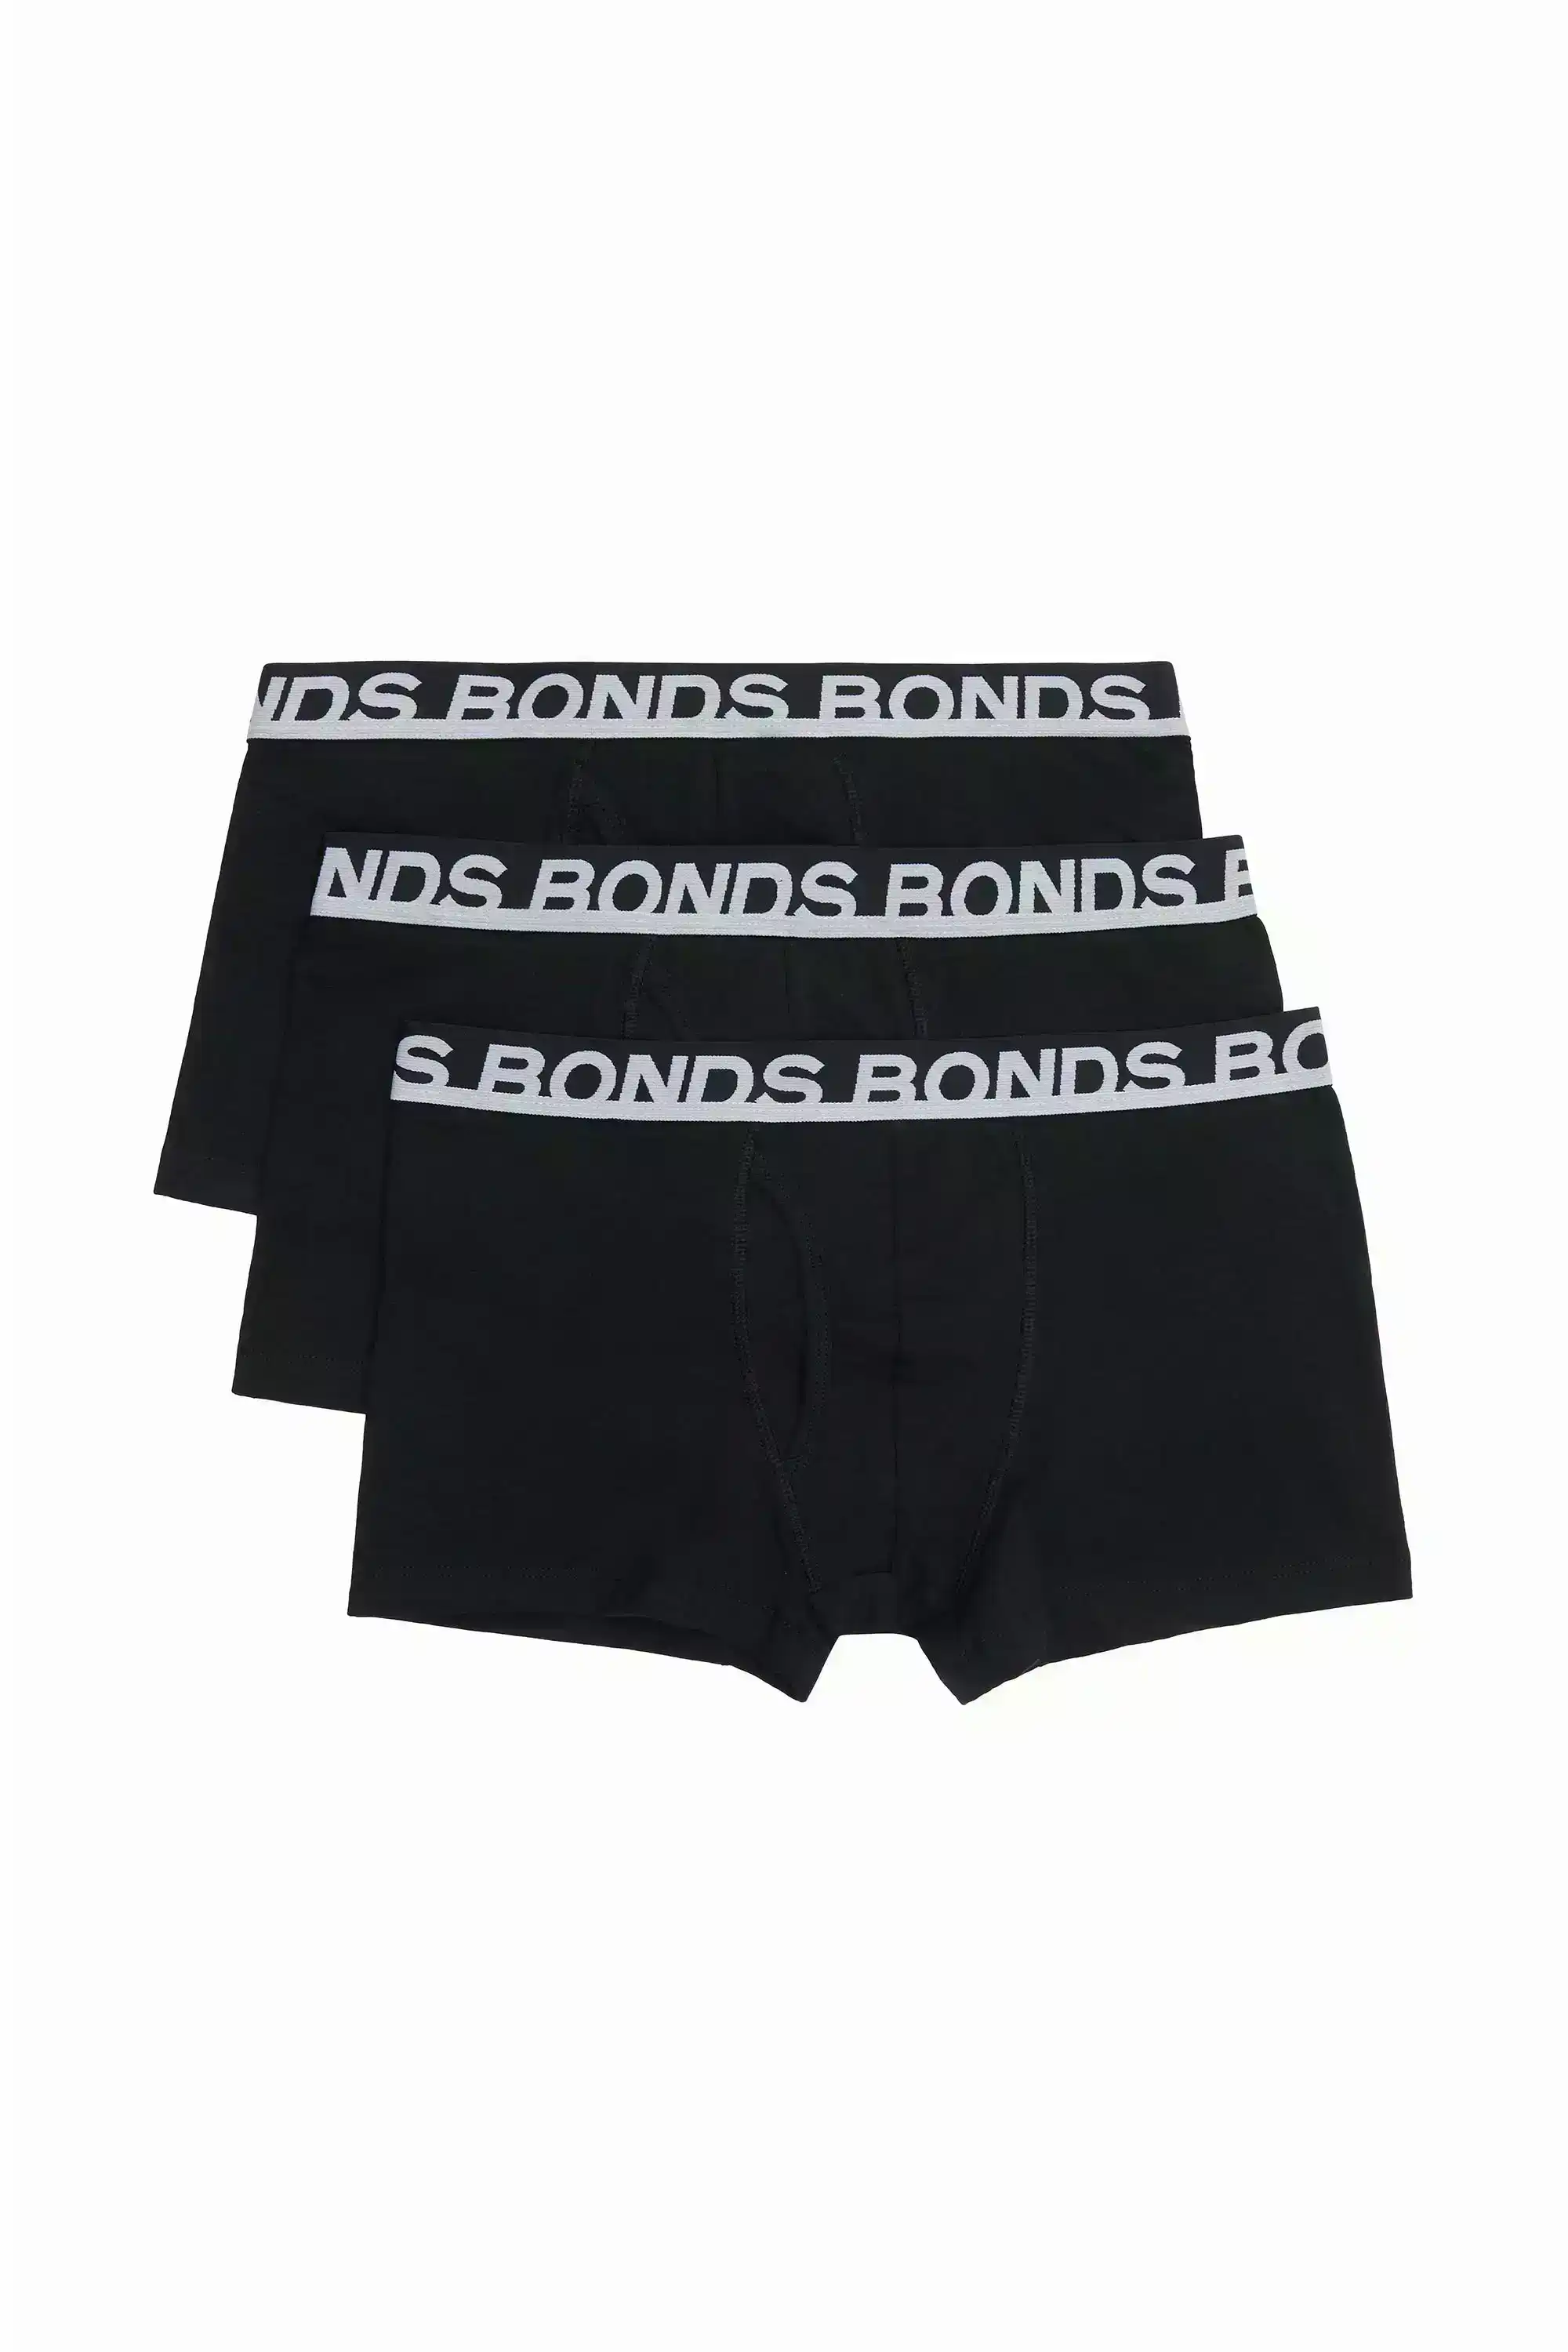 12 X Bonds Mens Everyday Trunks Underwear Black